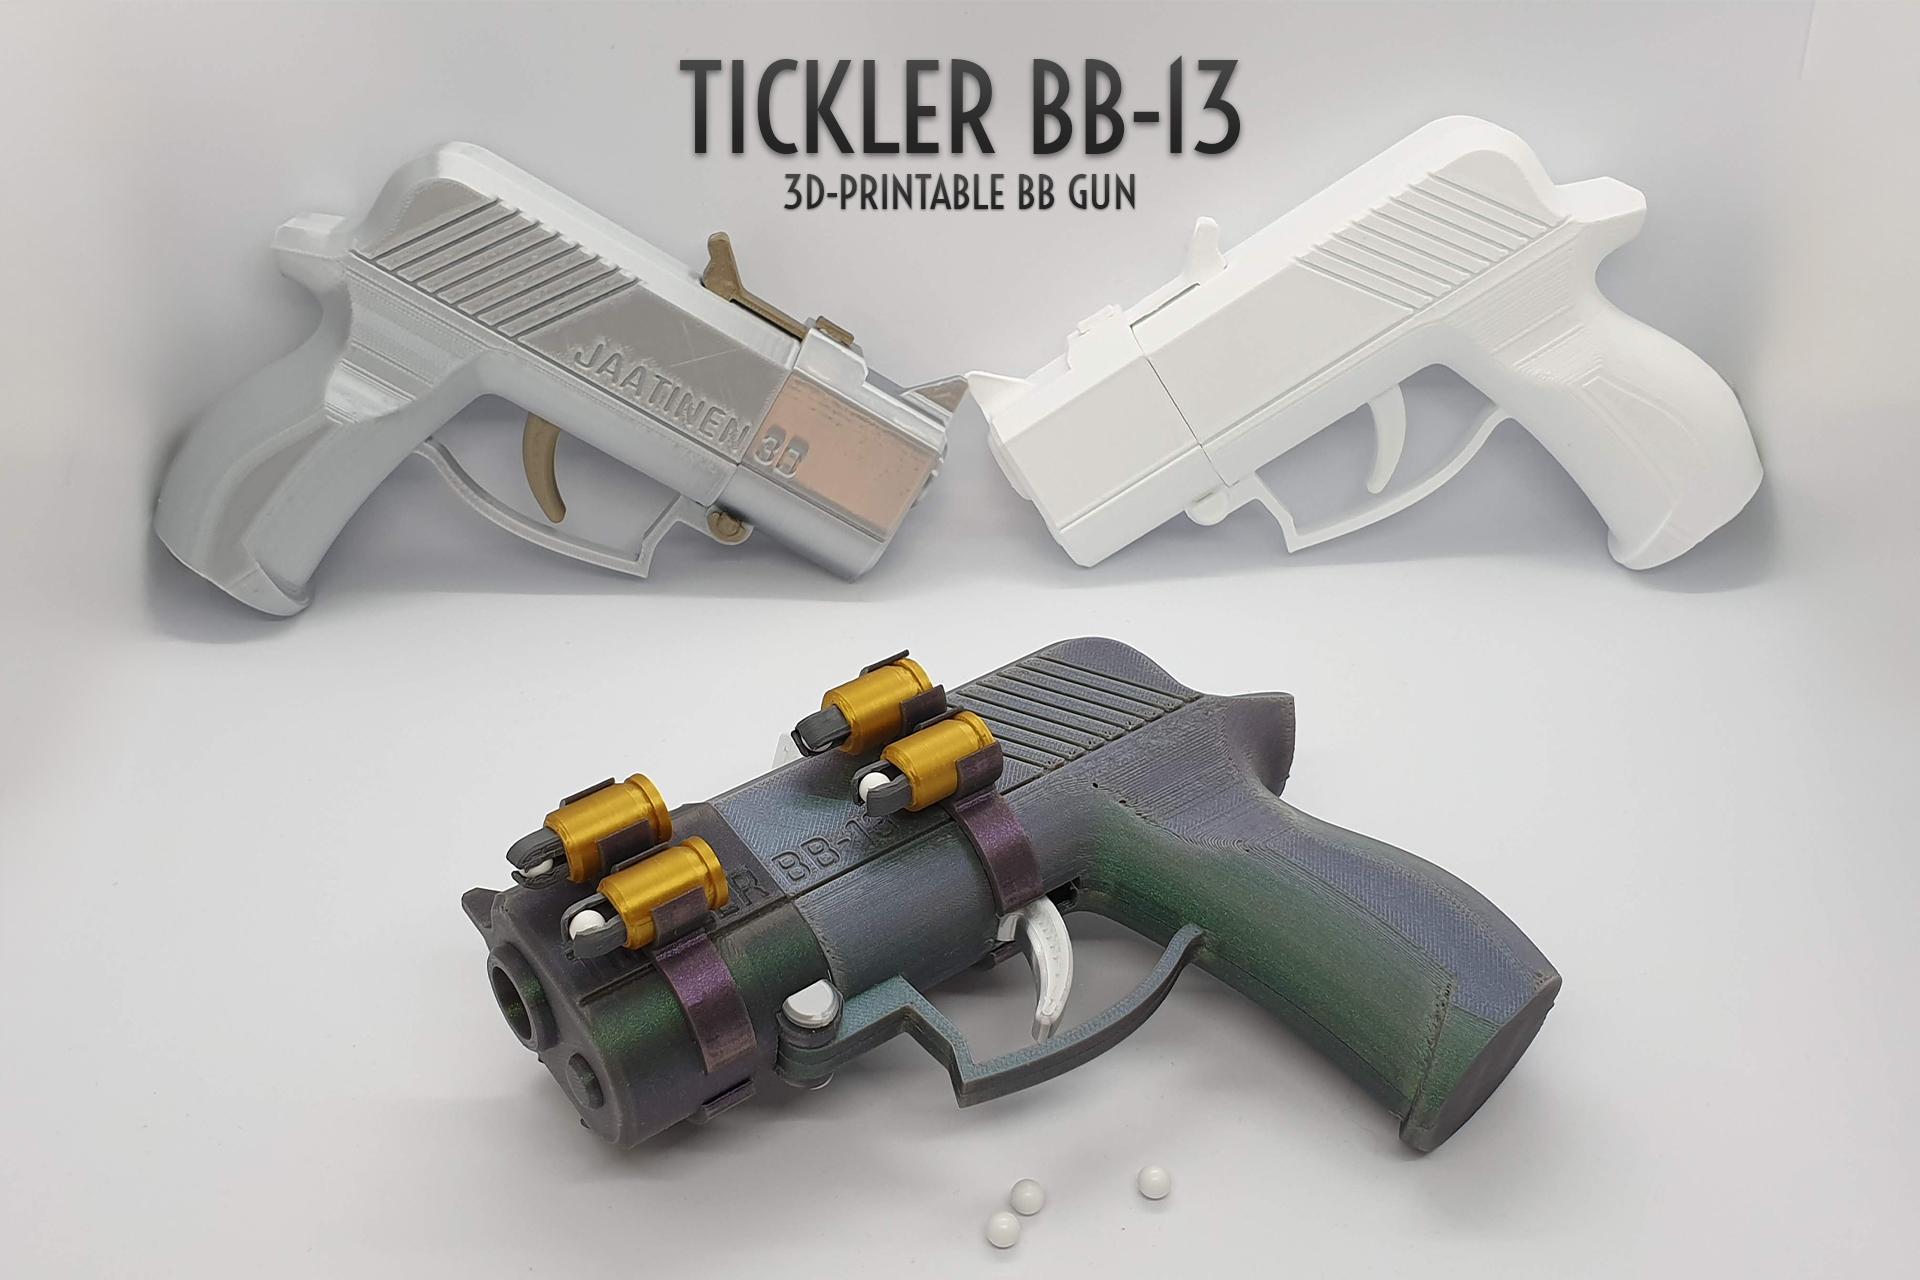 Tickler BB-13 — Fully 3D-printable airsoft gun